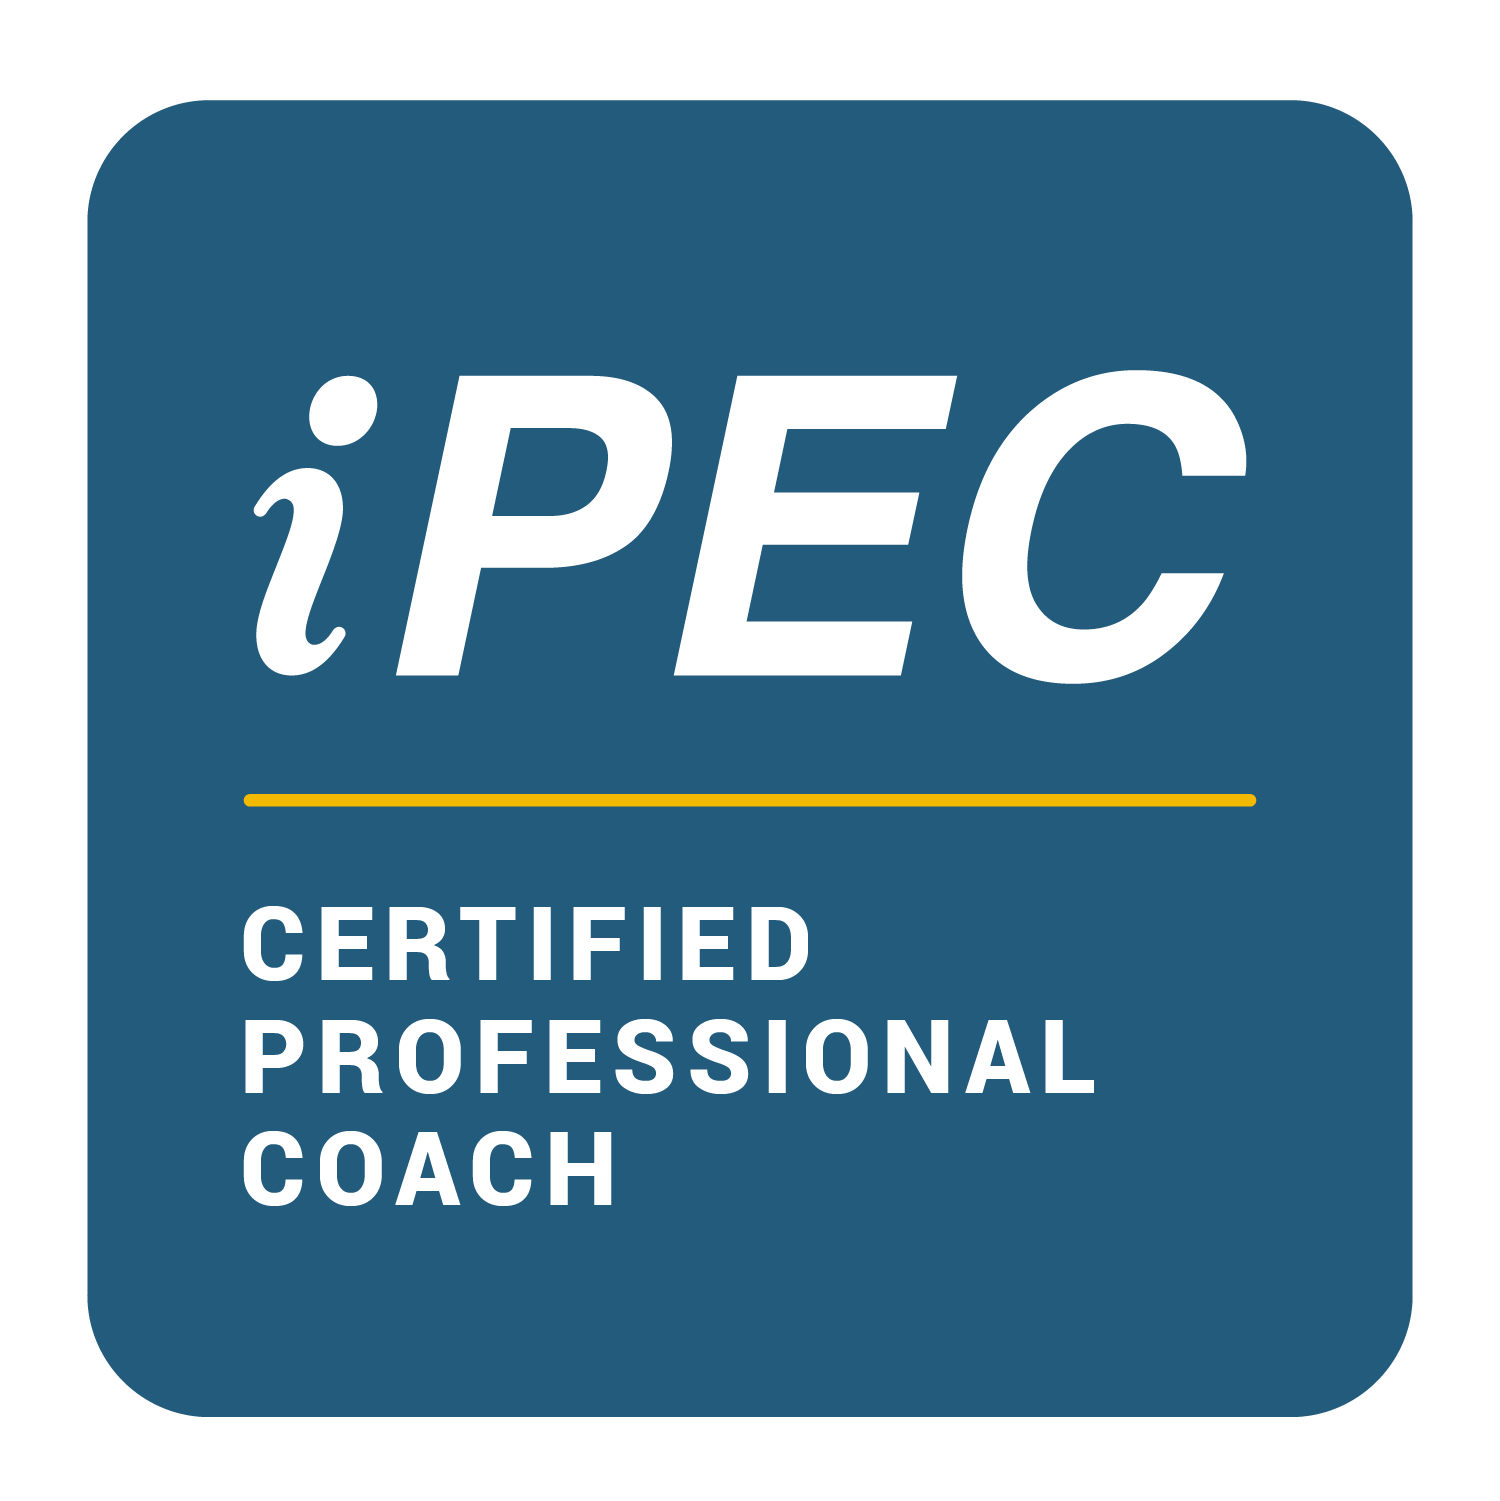 Certified Professional Coach (CPC)